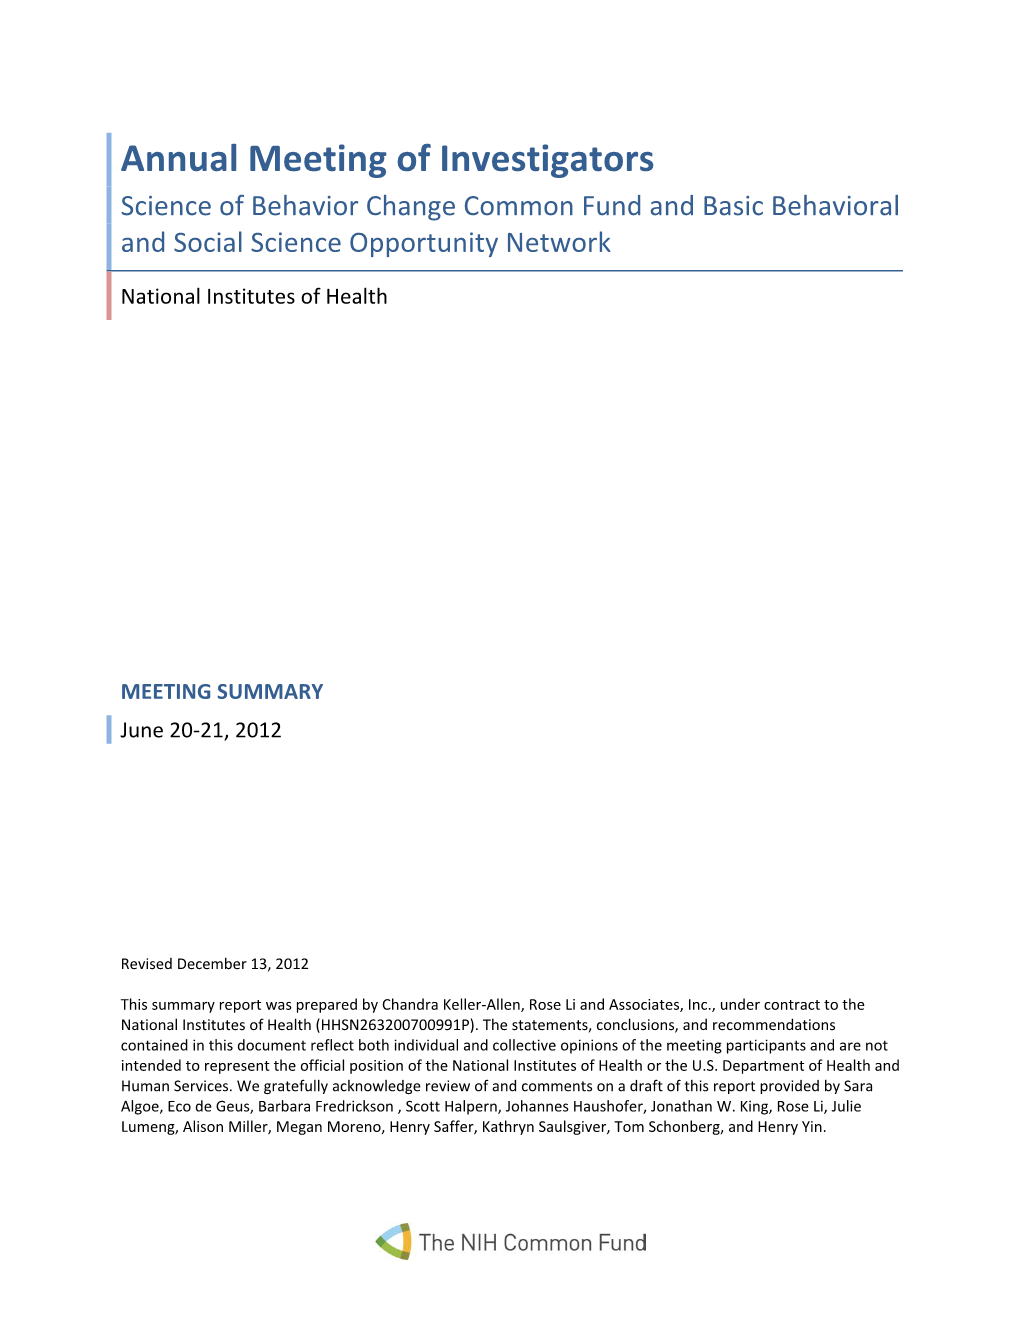 Annual Meeting of Investigators SOBC-Oppnet June 2012 Meeting